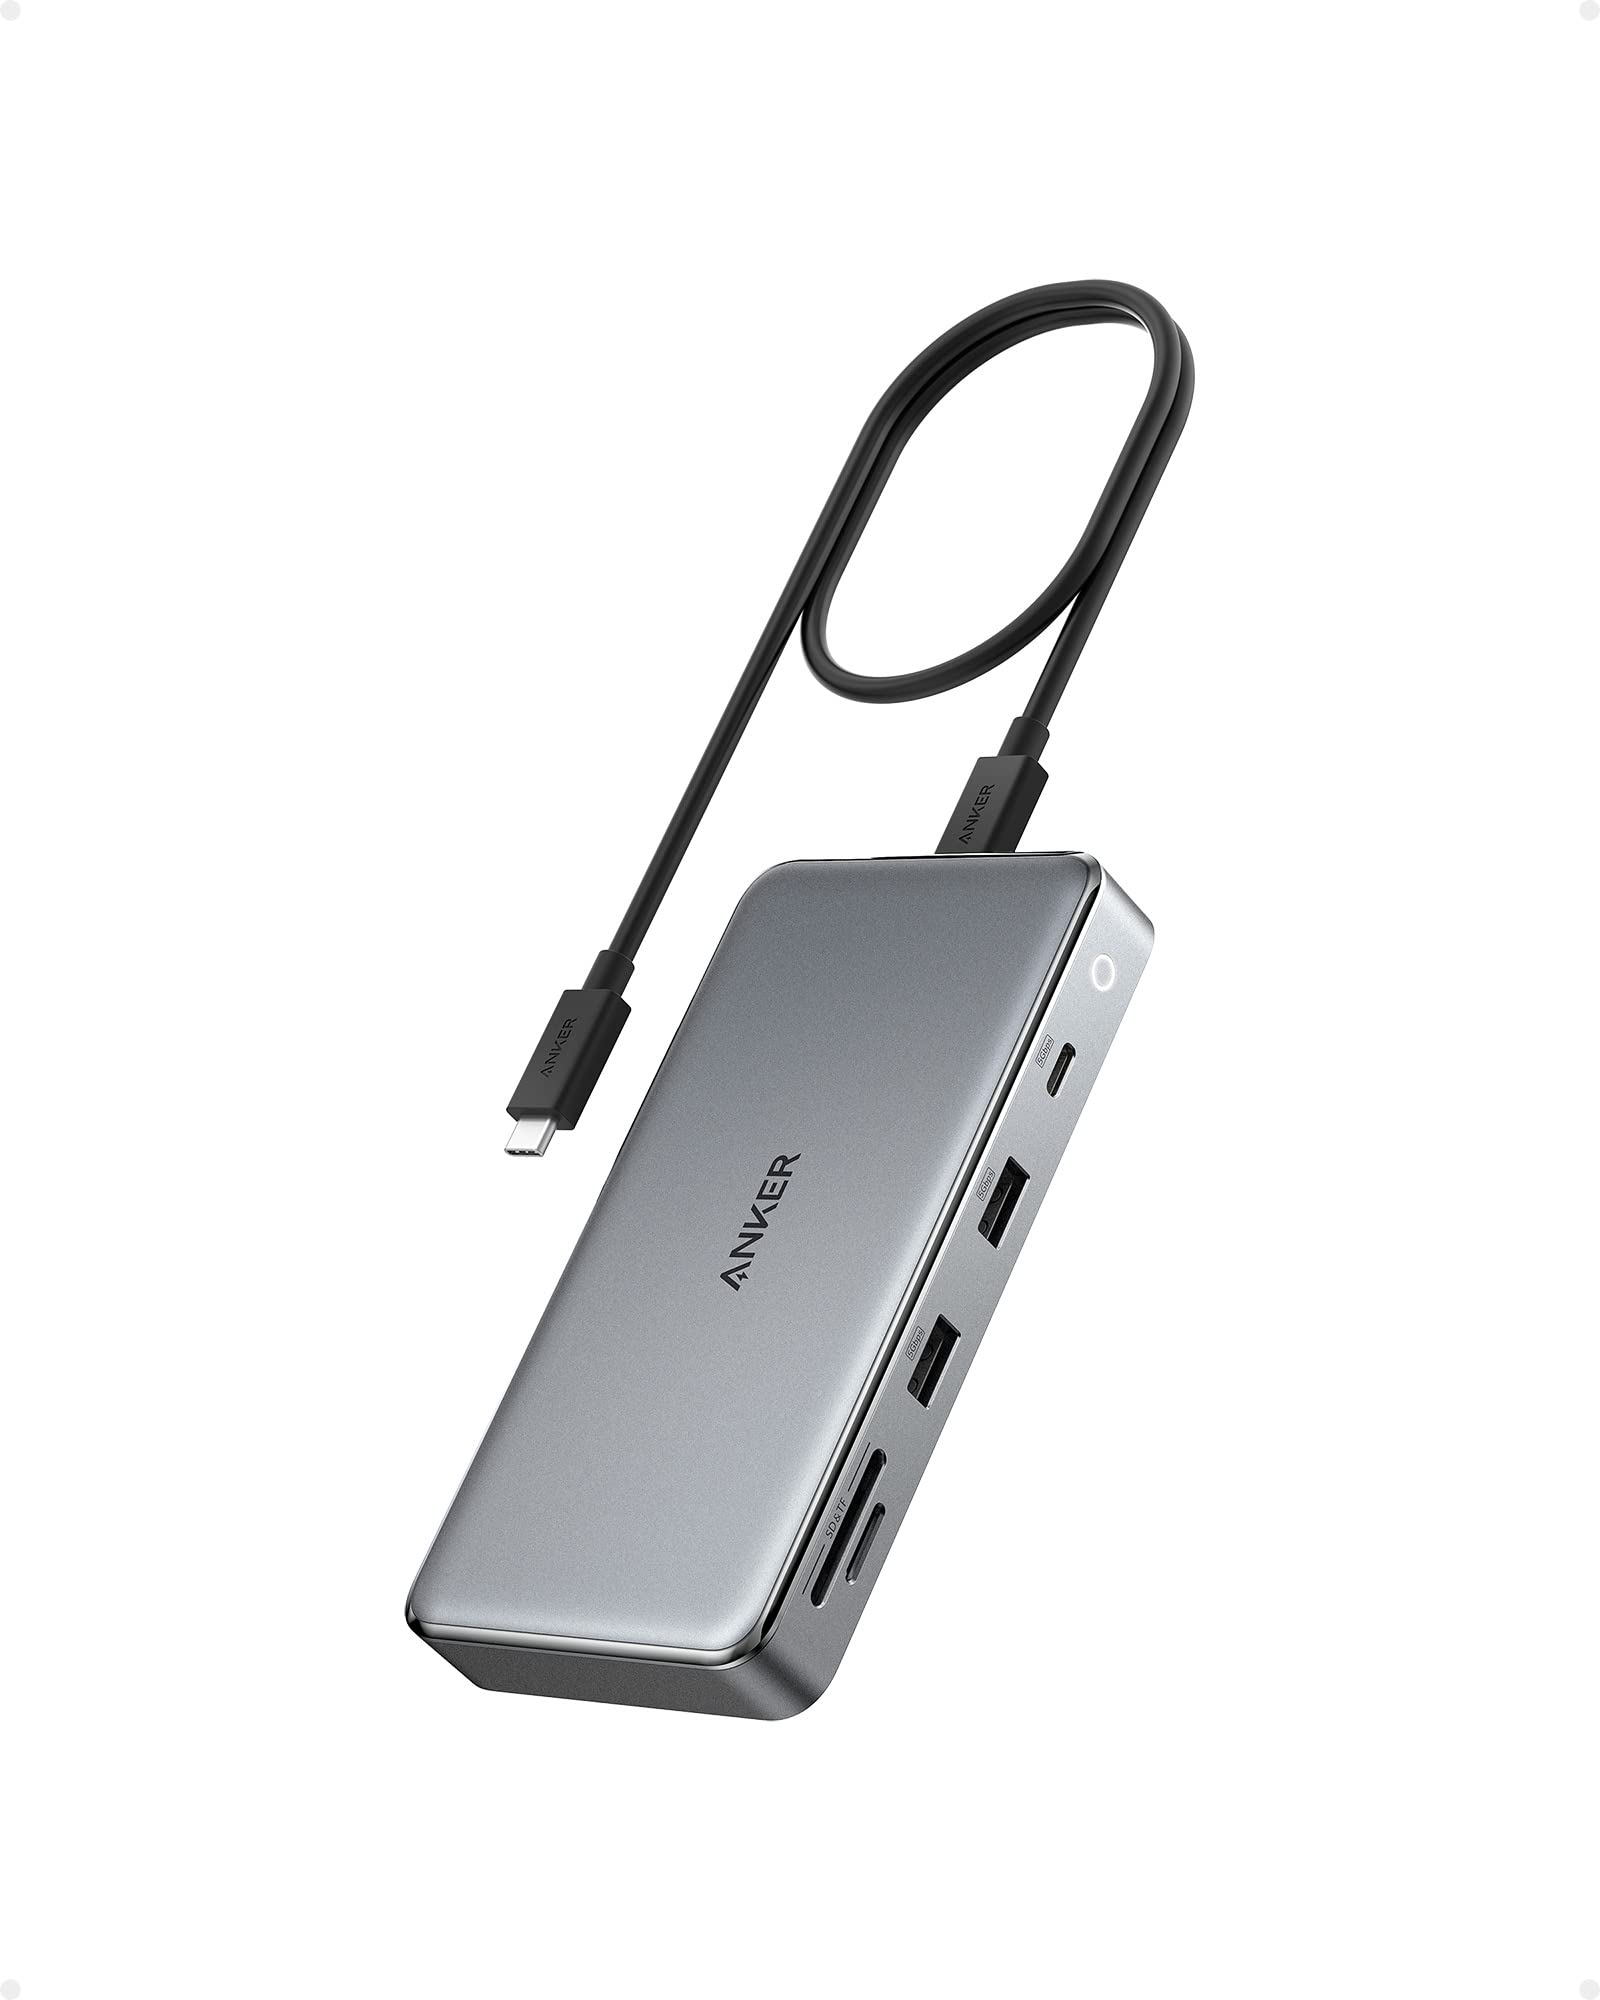 Anker <b>563</b> USB-C Hub (10-in-1, Dual 4K HDMI, For MacBook)